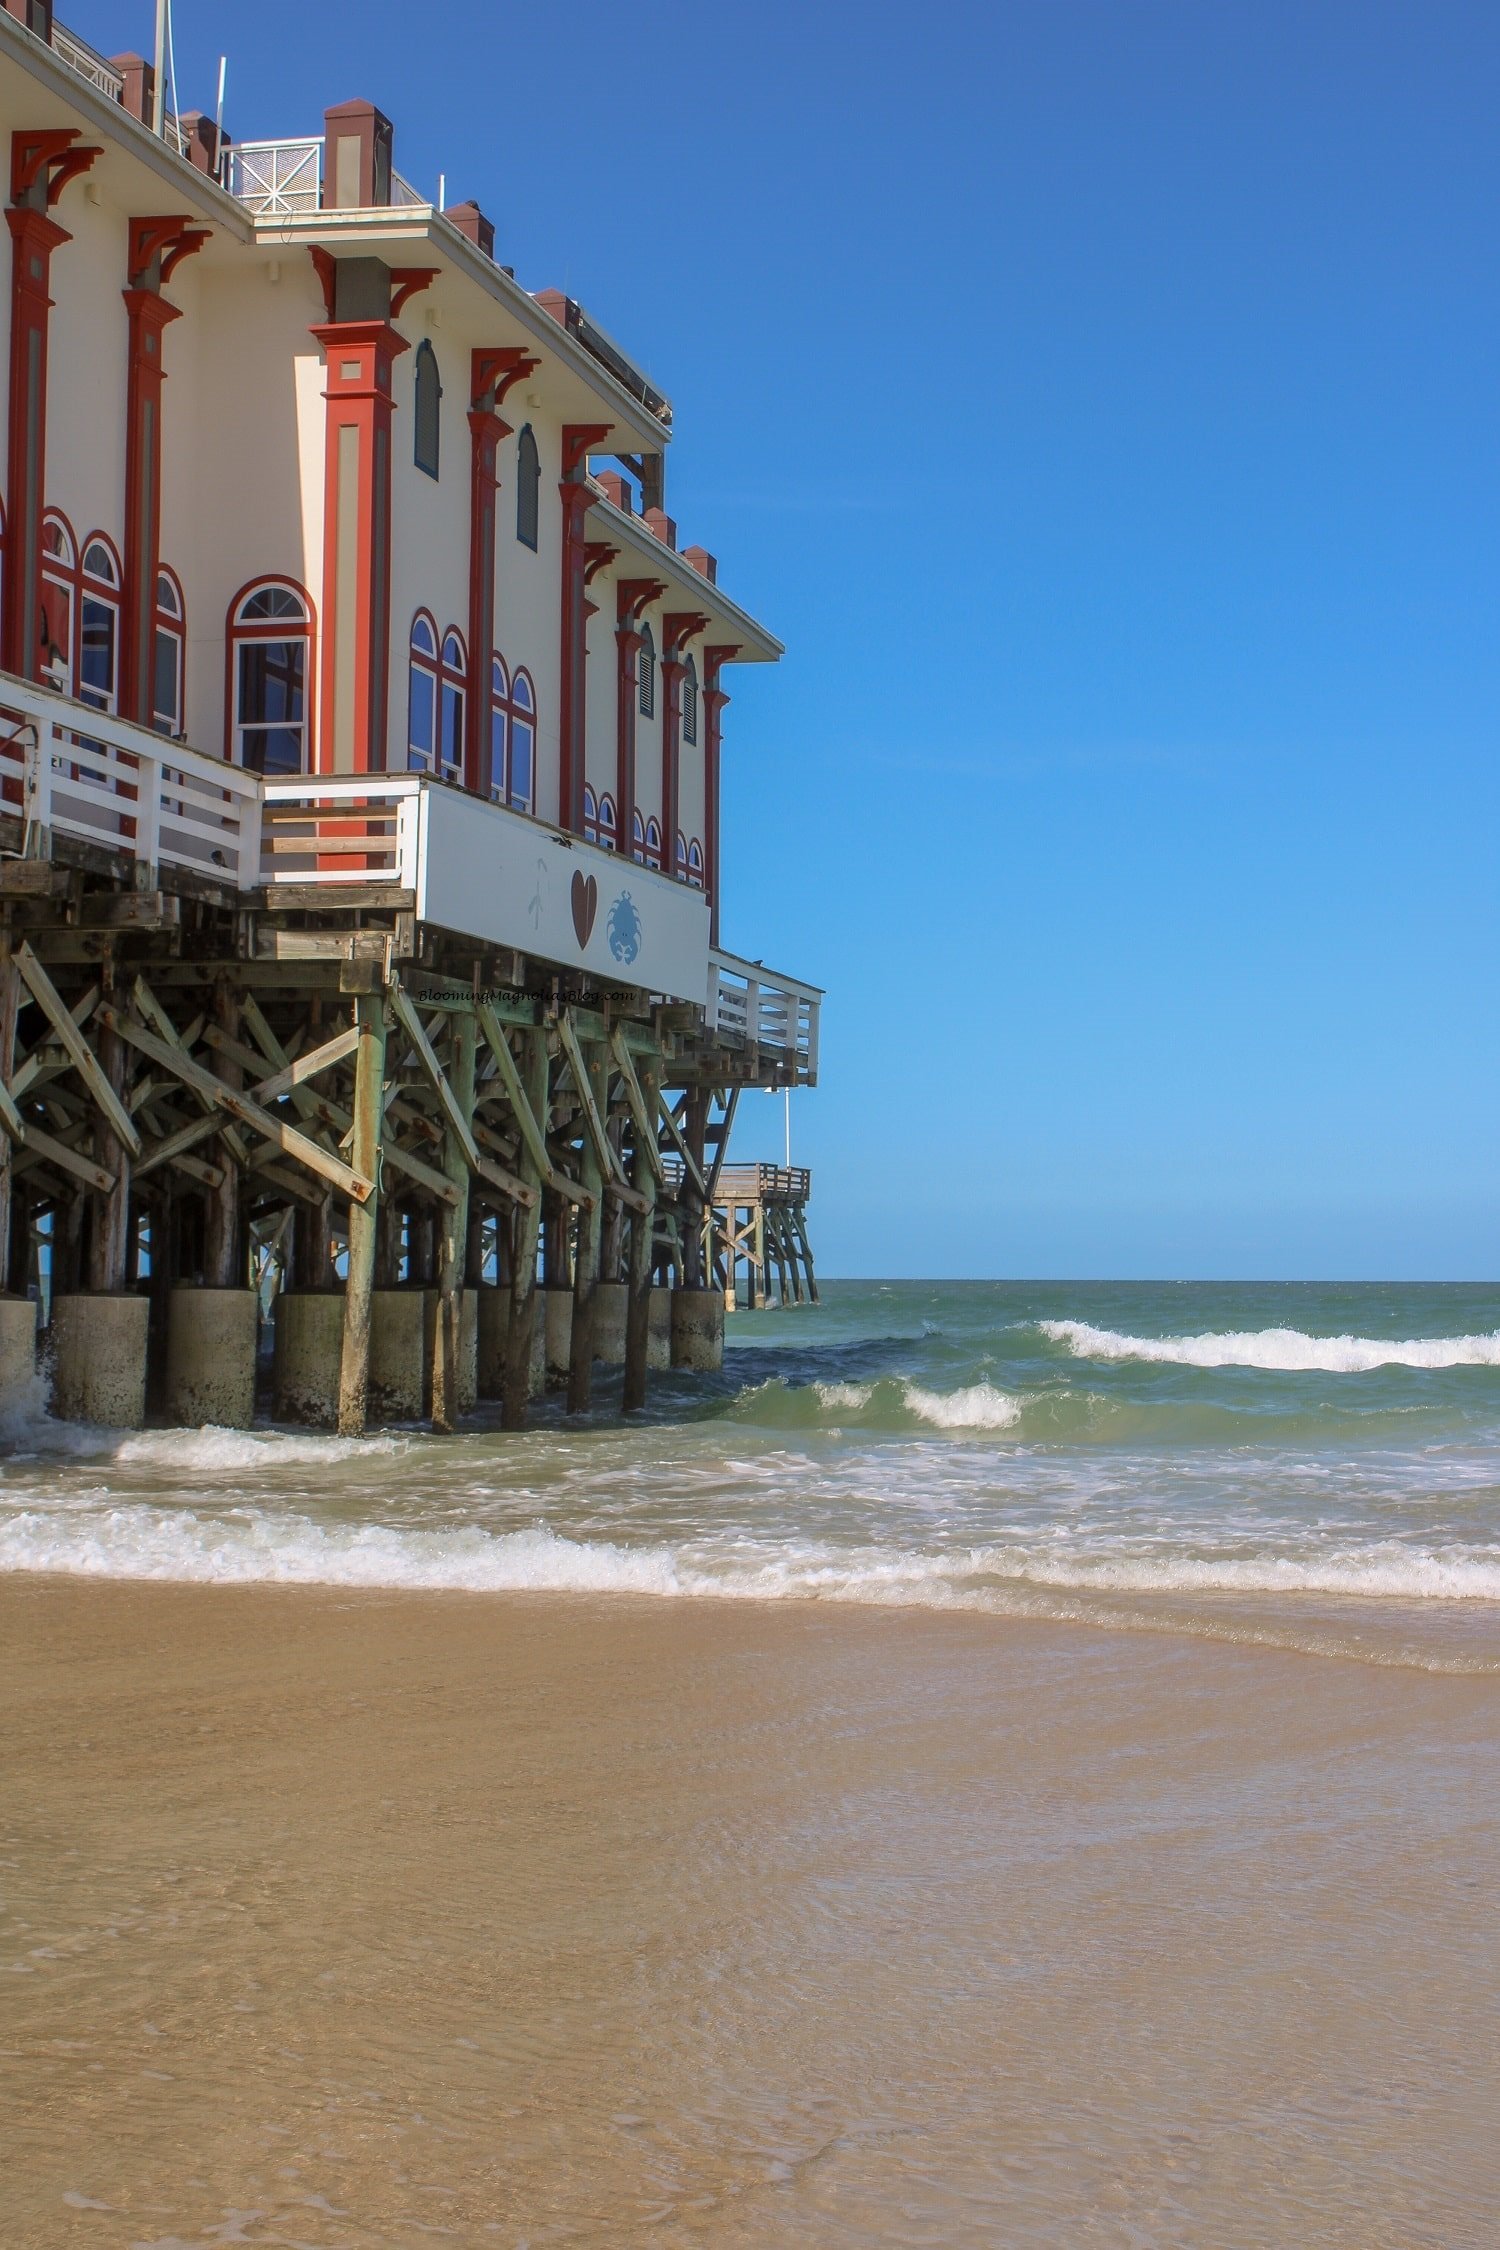 Postcards from Daytona Beach... | Blooming Magnolias Blog | Travel, beach day, Daytona Beach pier